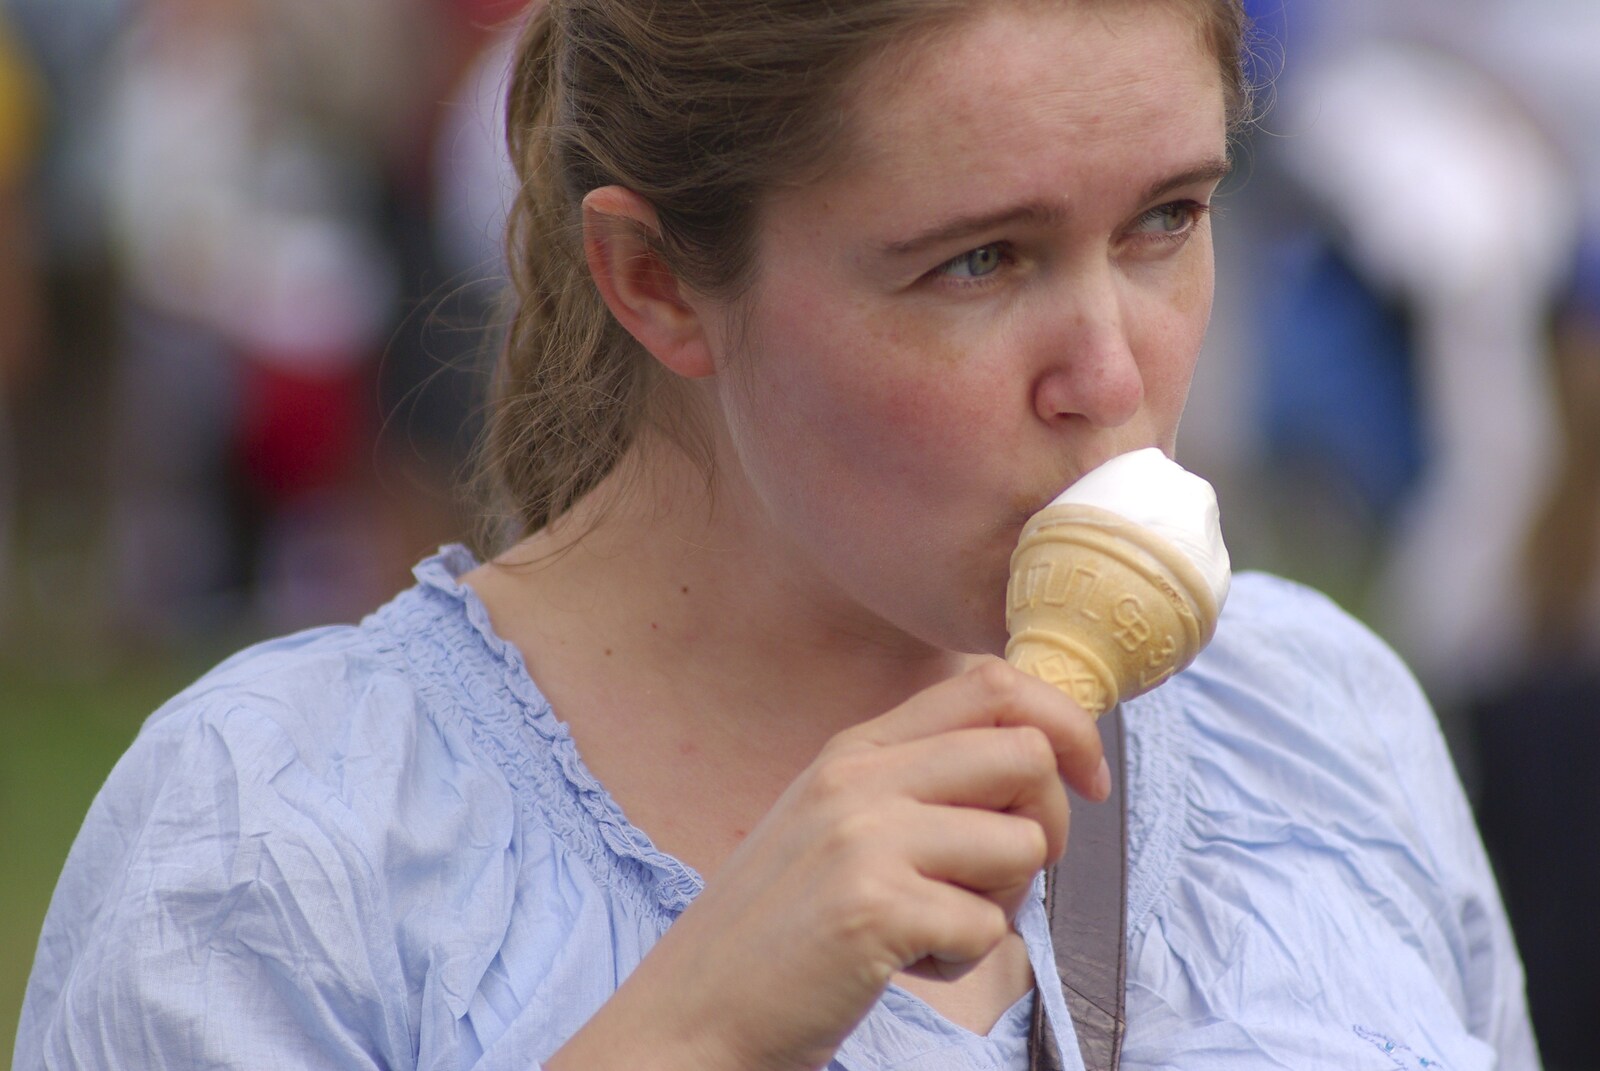 Qualcomm's Dragon-Boat Racing, Fen Ditton, Cambridge - 8th September 2007: Isobel slurps an ice-cream